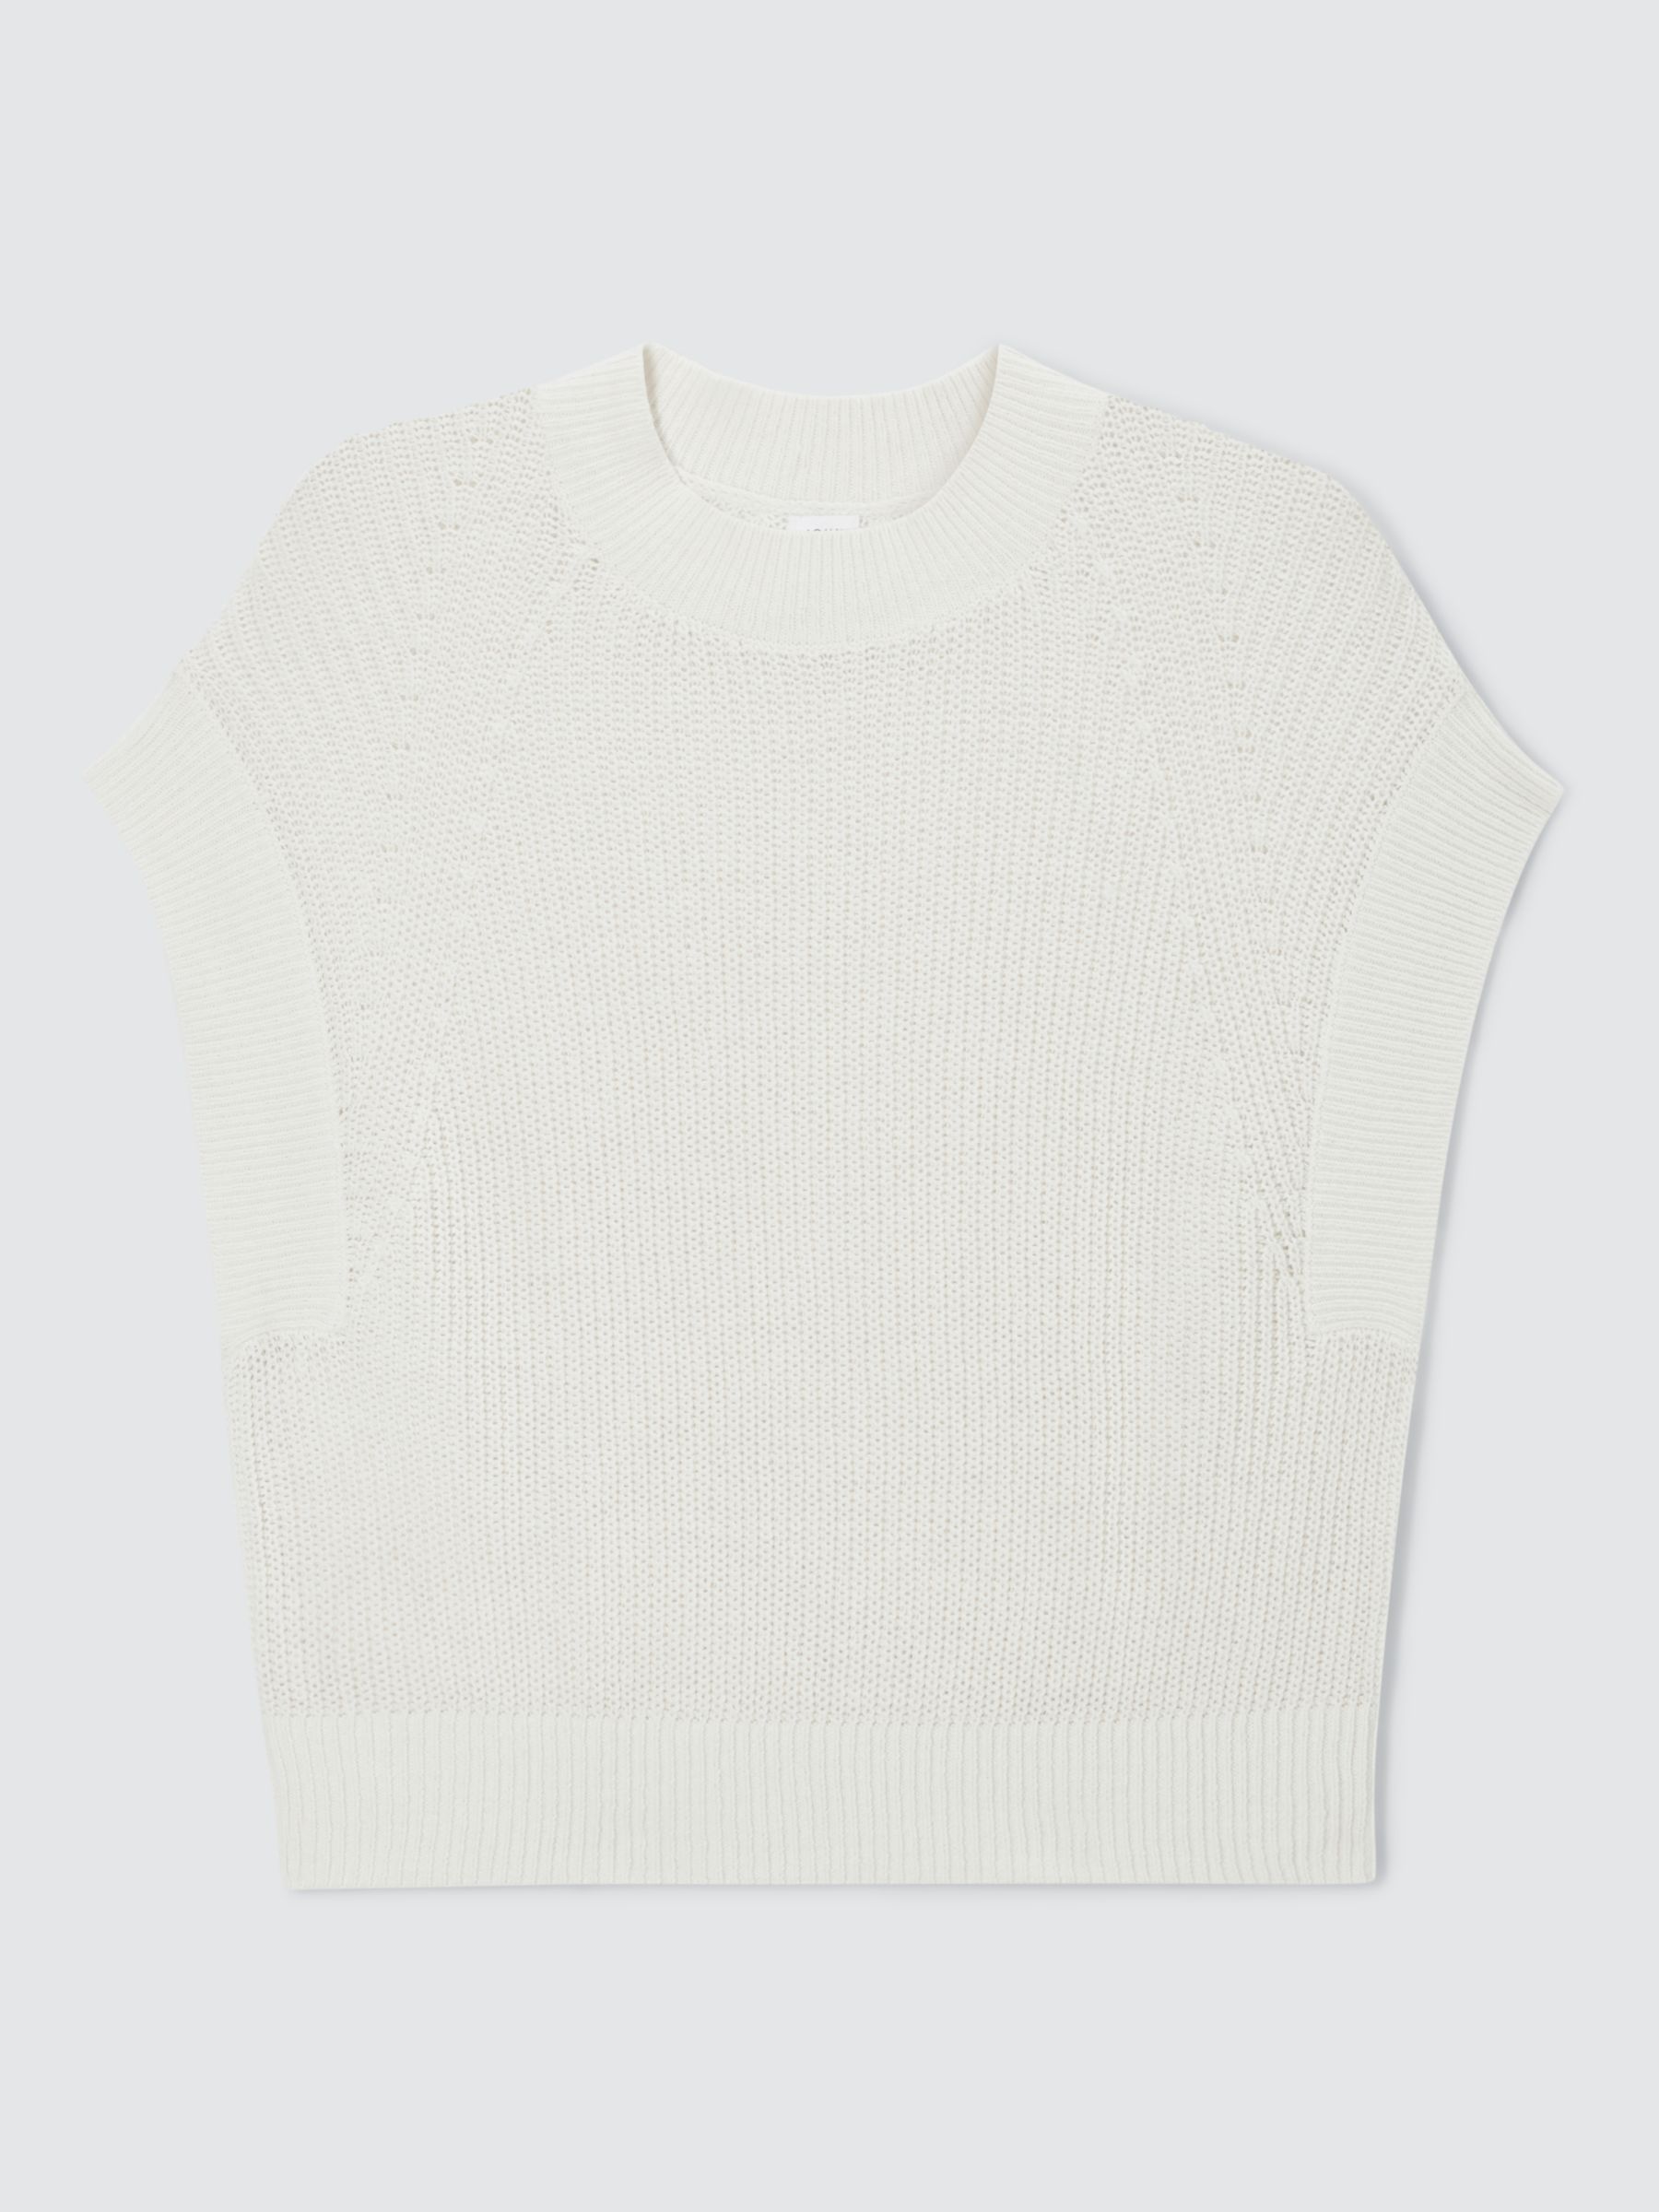 John Lewis Grown On Sleeve Knit Top, White, XL